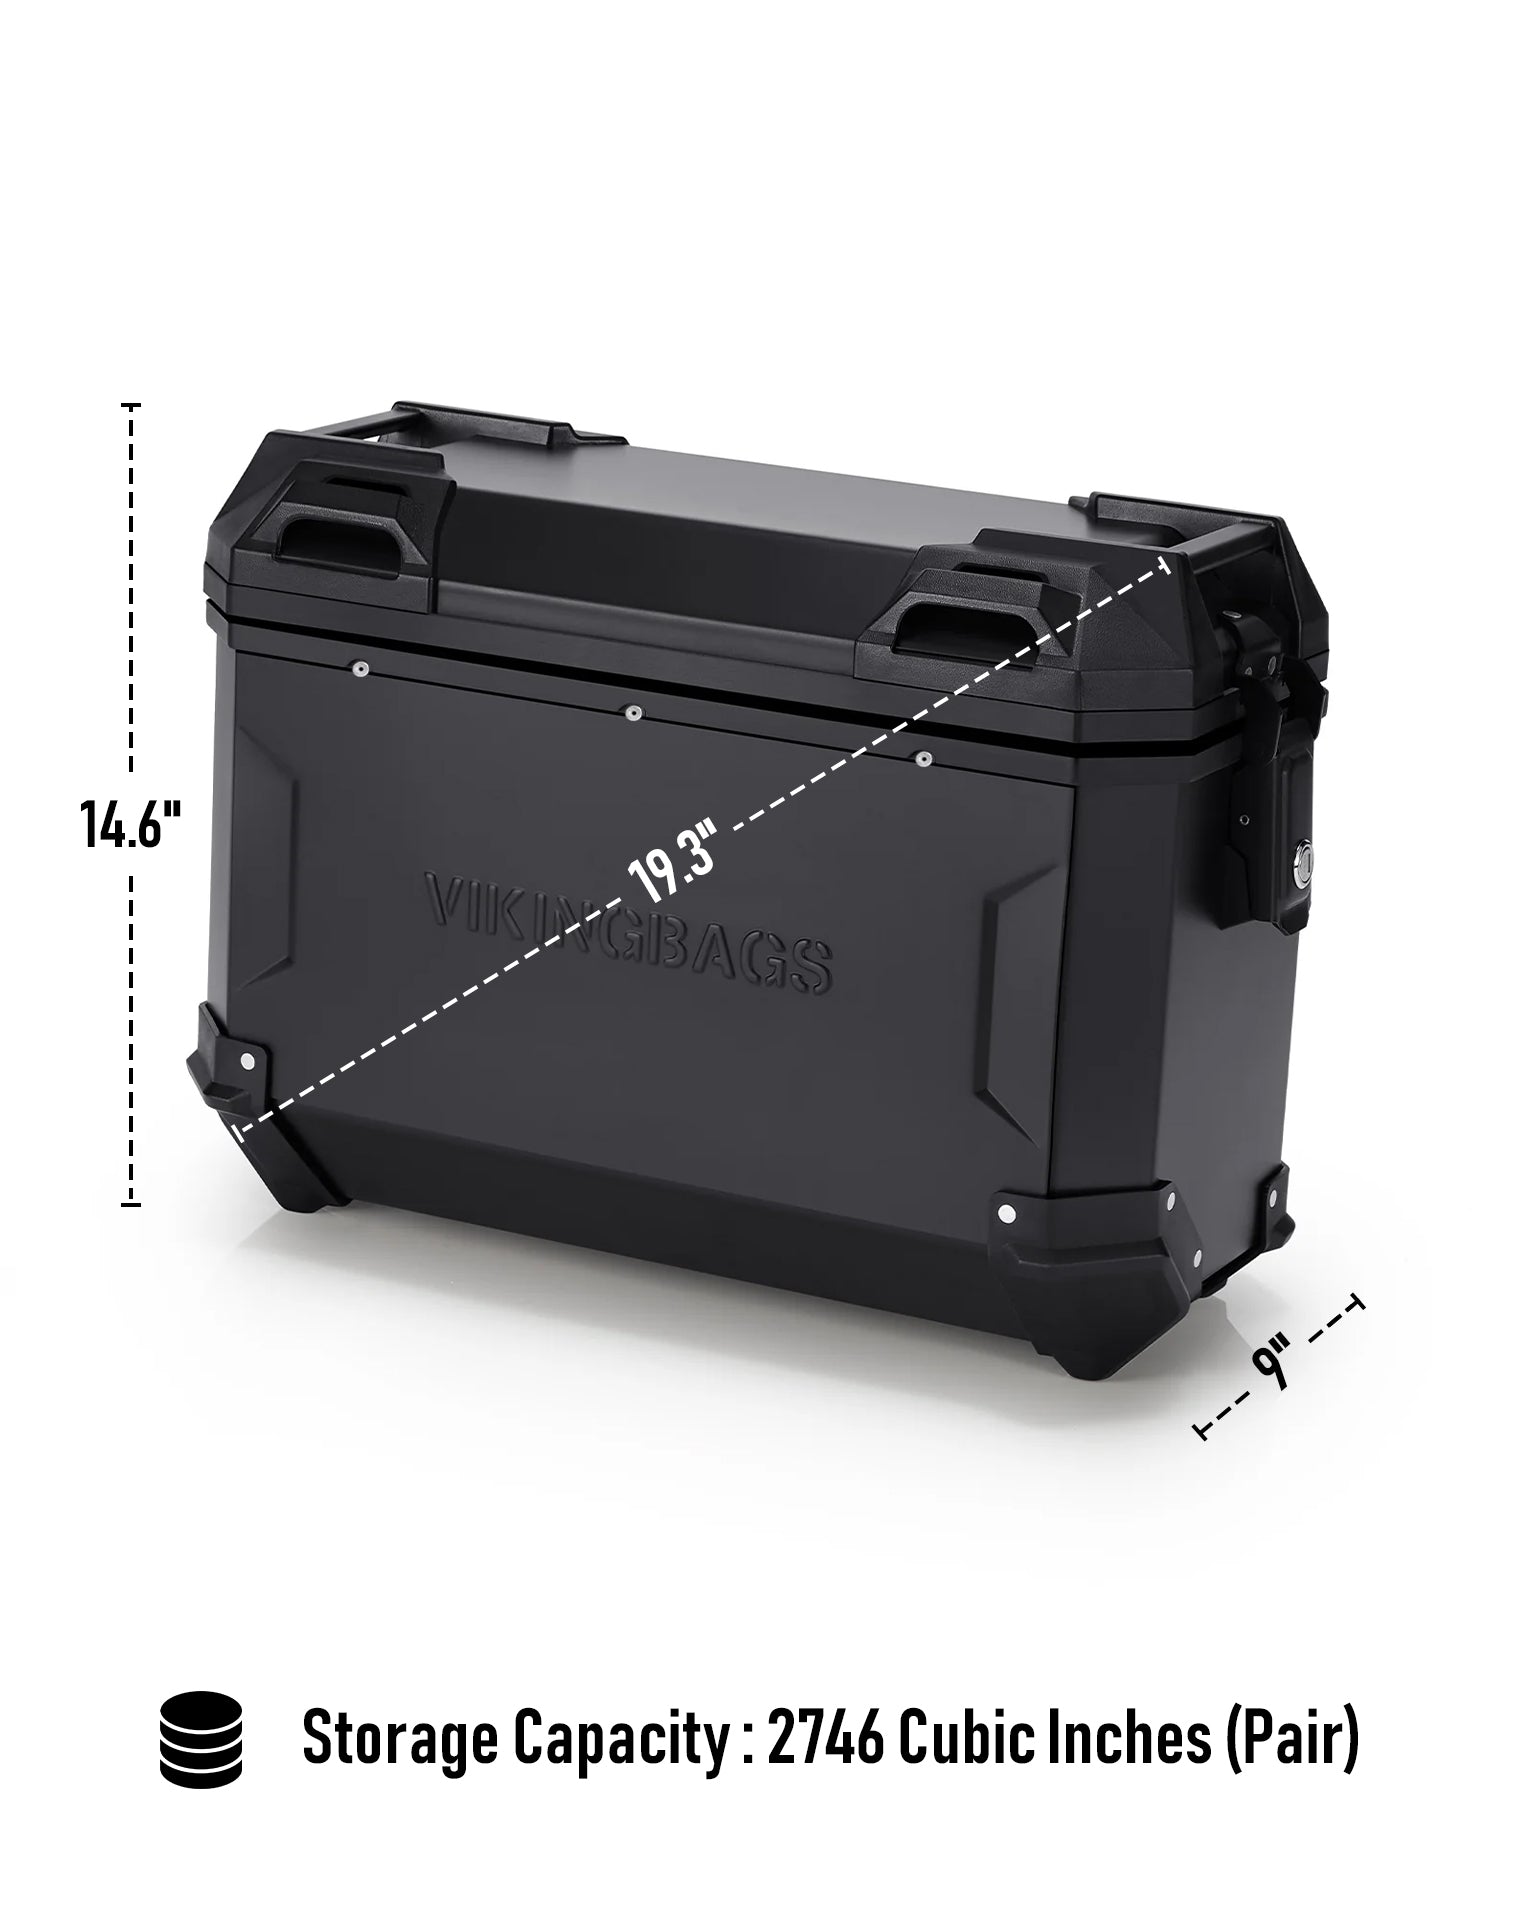 Viking Apex XL Suzuki V-Storm 1050 Aluminum Side Cases Black Cubic Inches